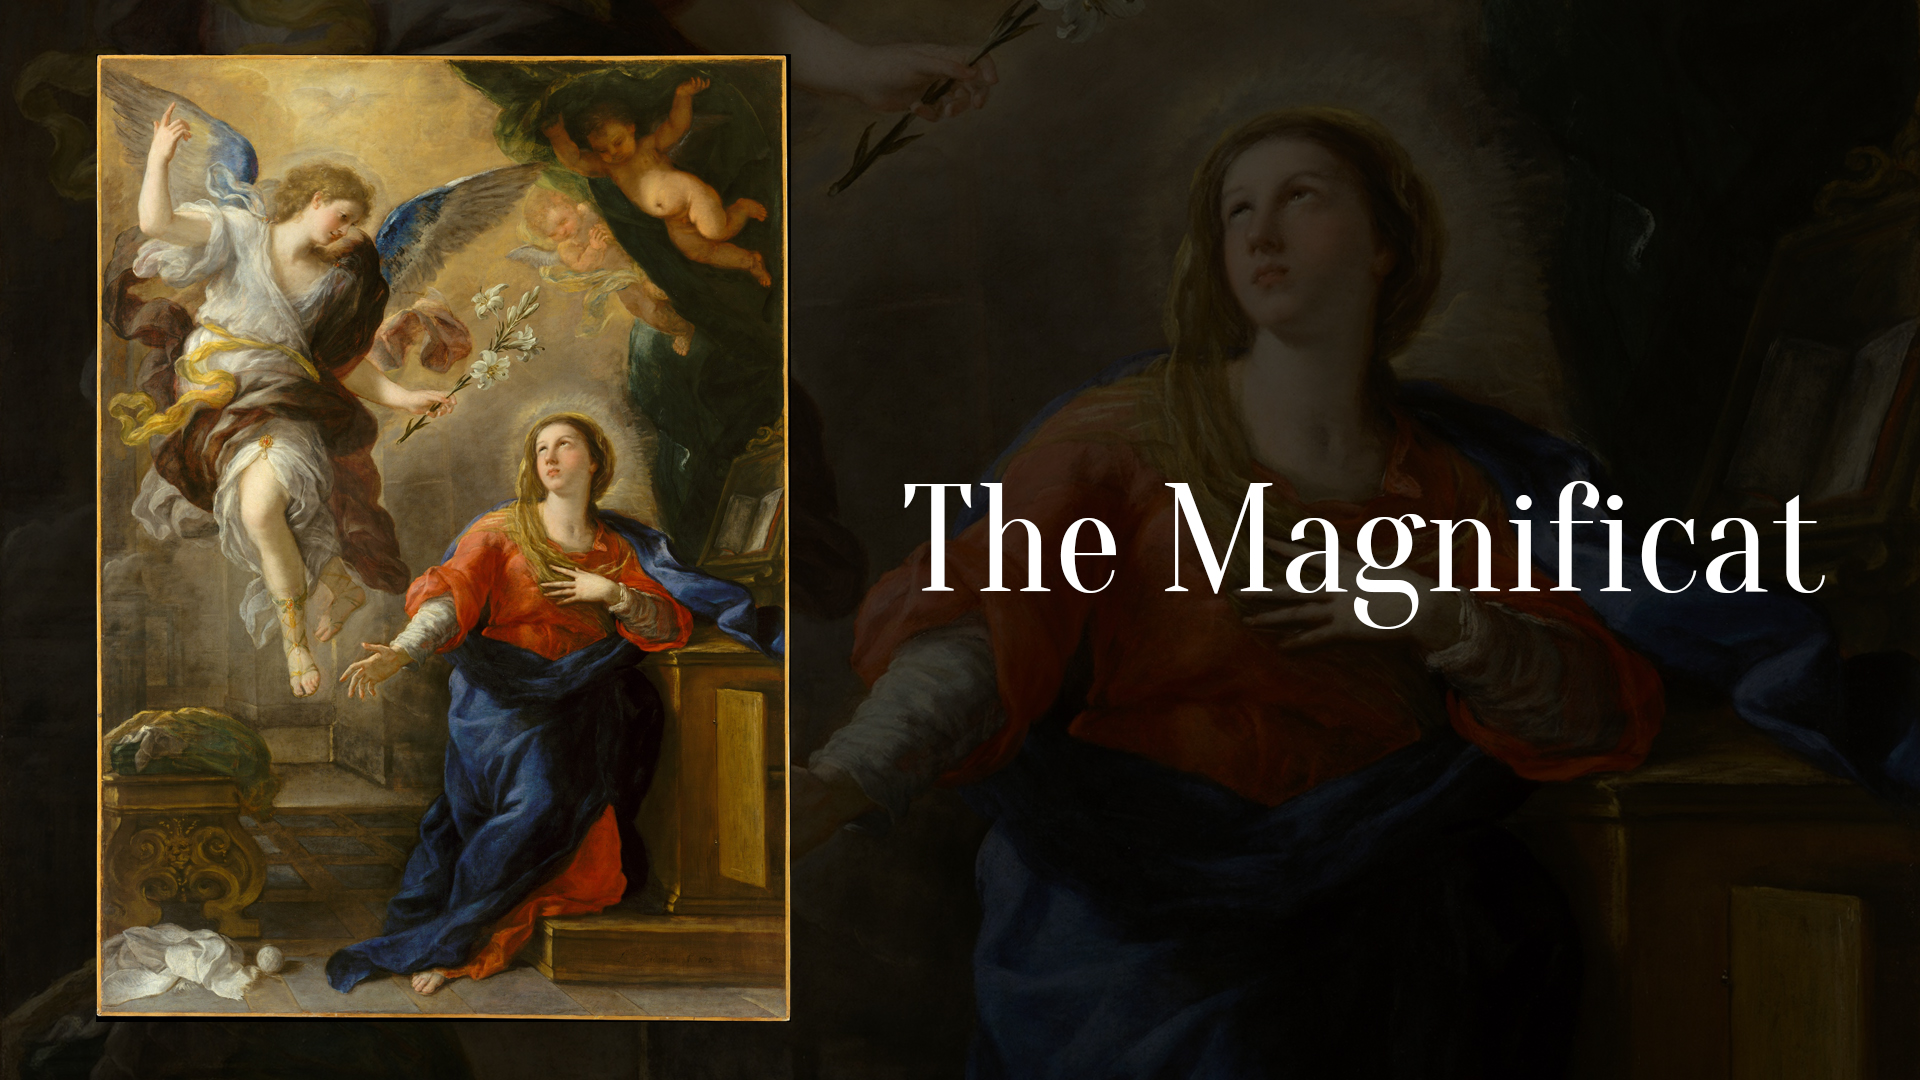 The Magnificat